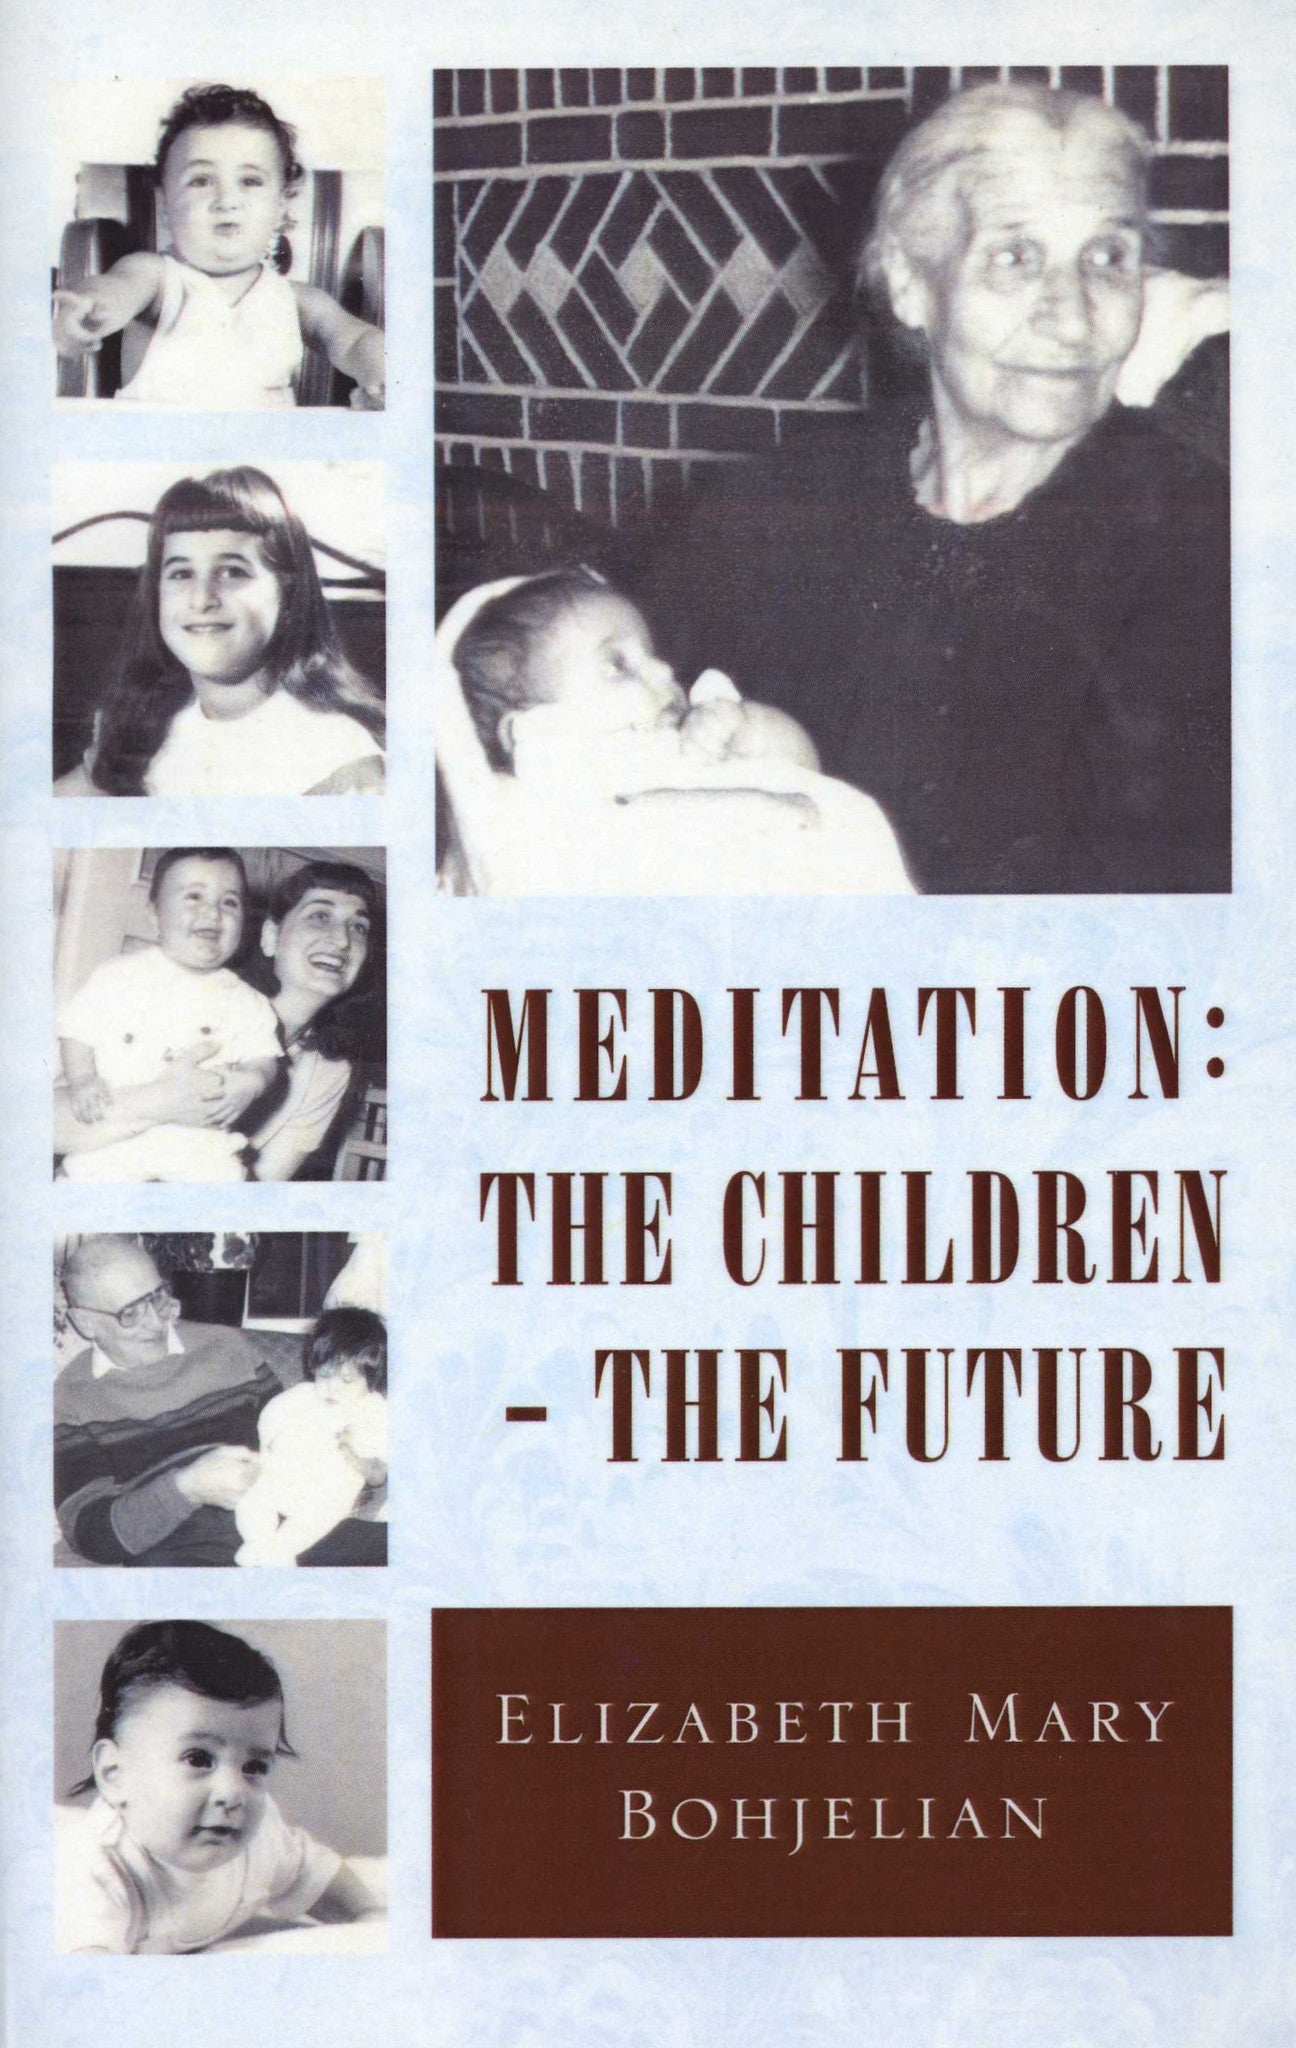 MEDITATION: The Children - The Future